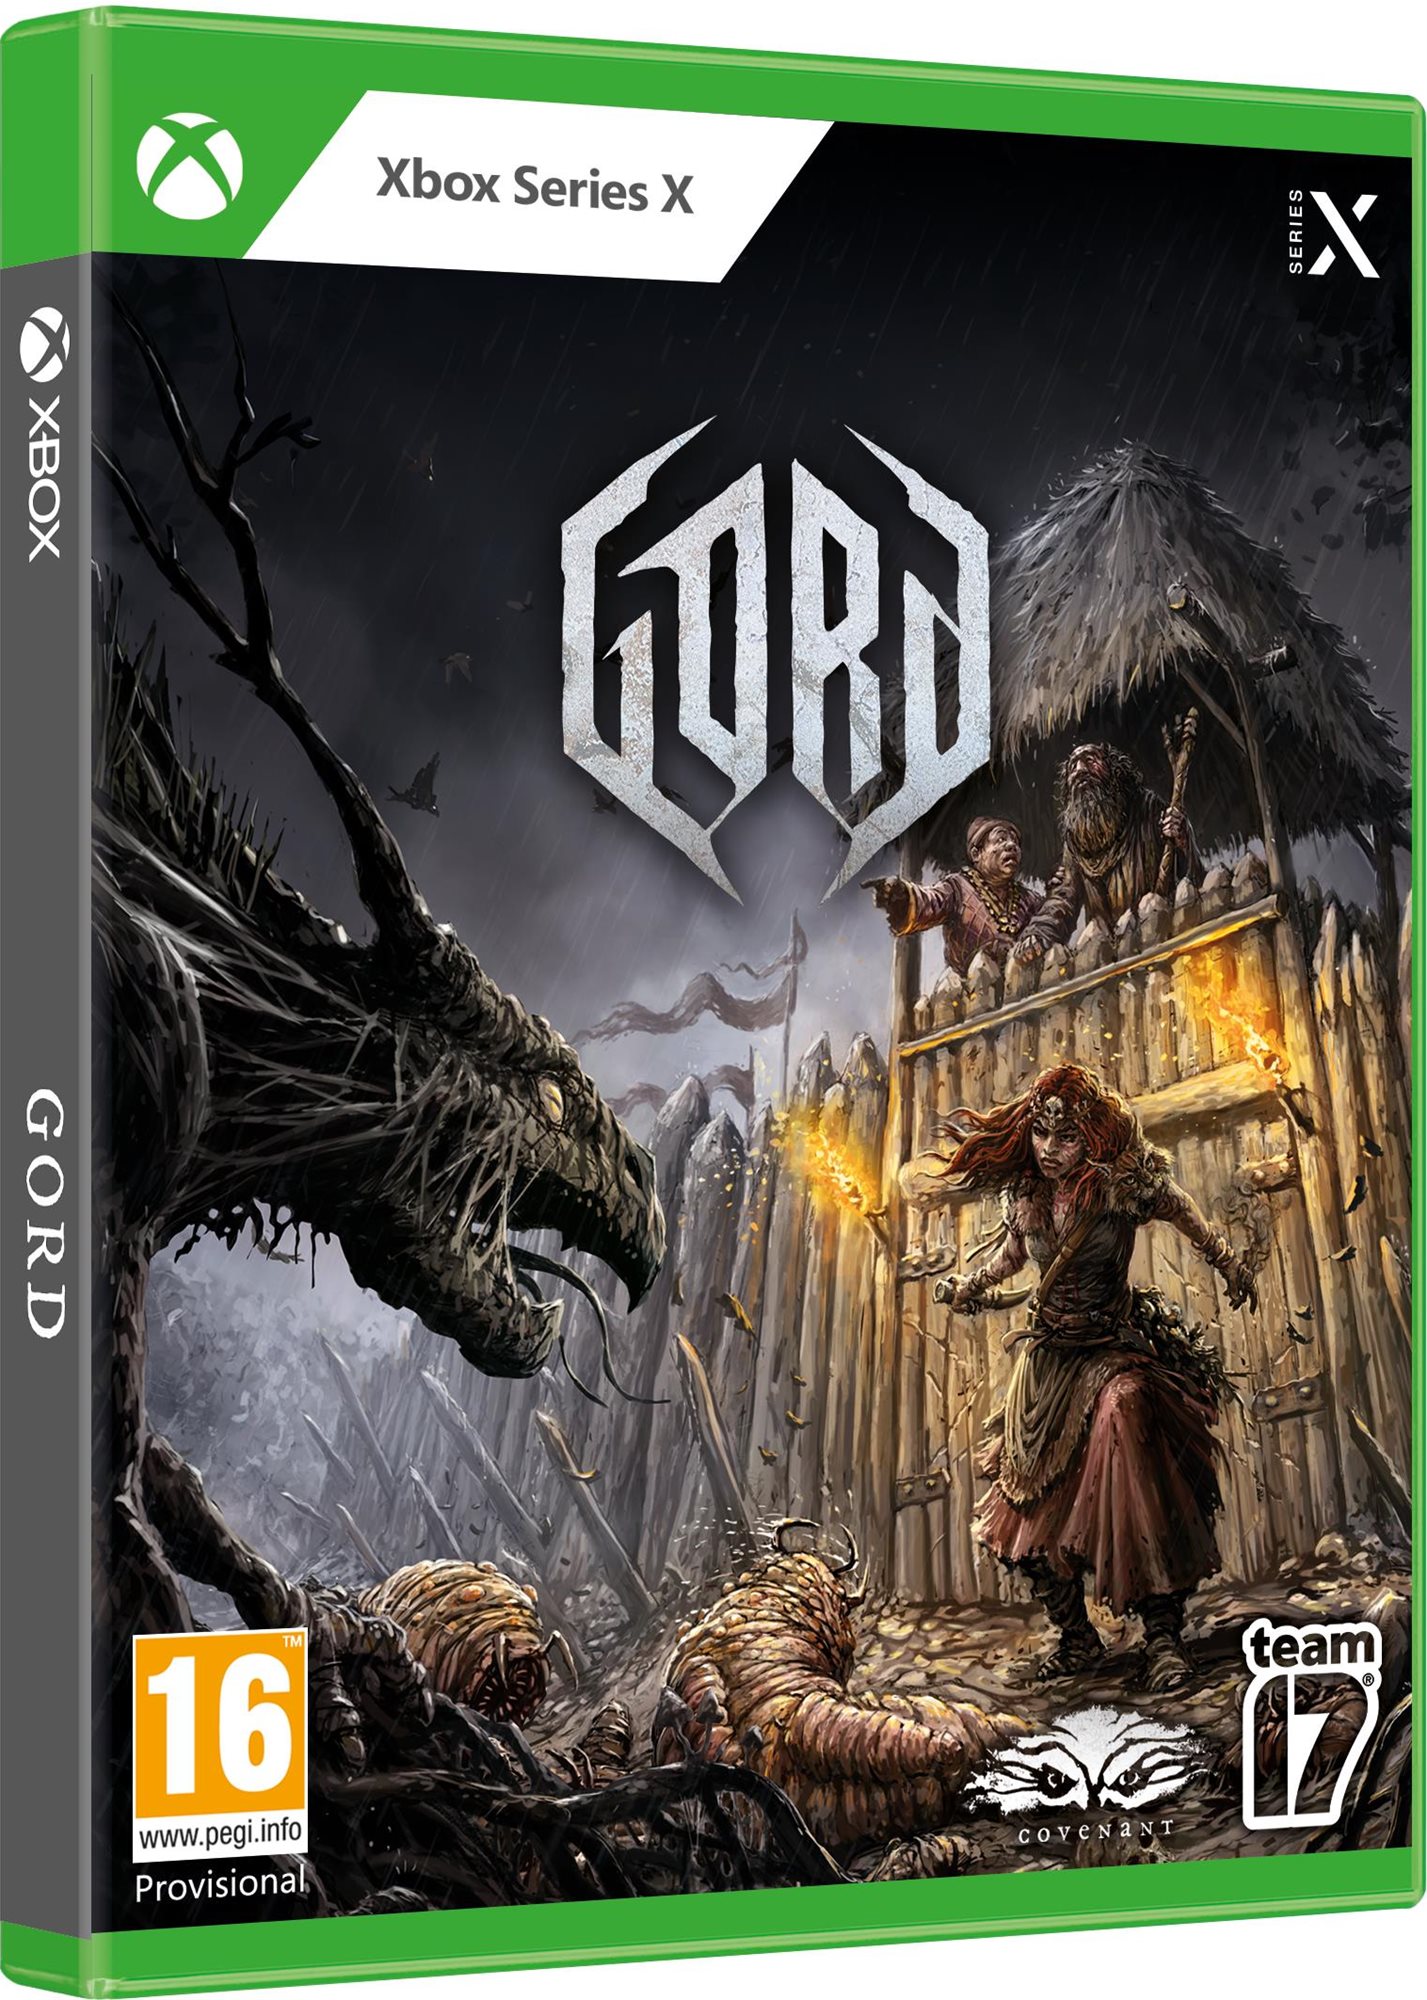 Konzol játék Gord - Xbox Series X